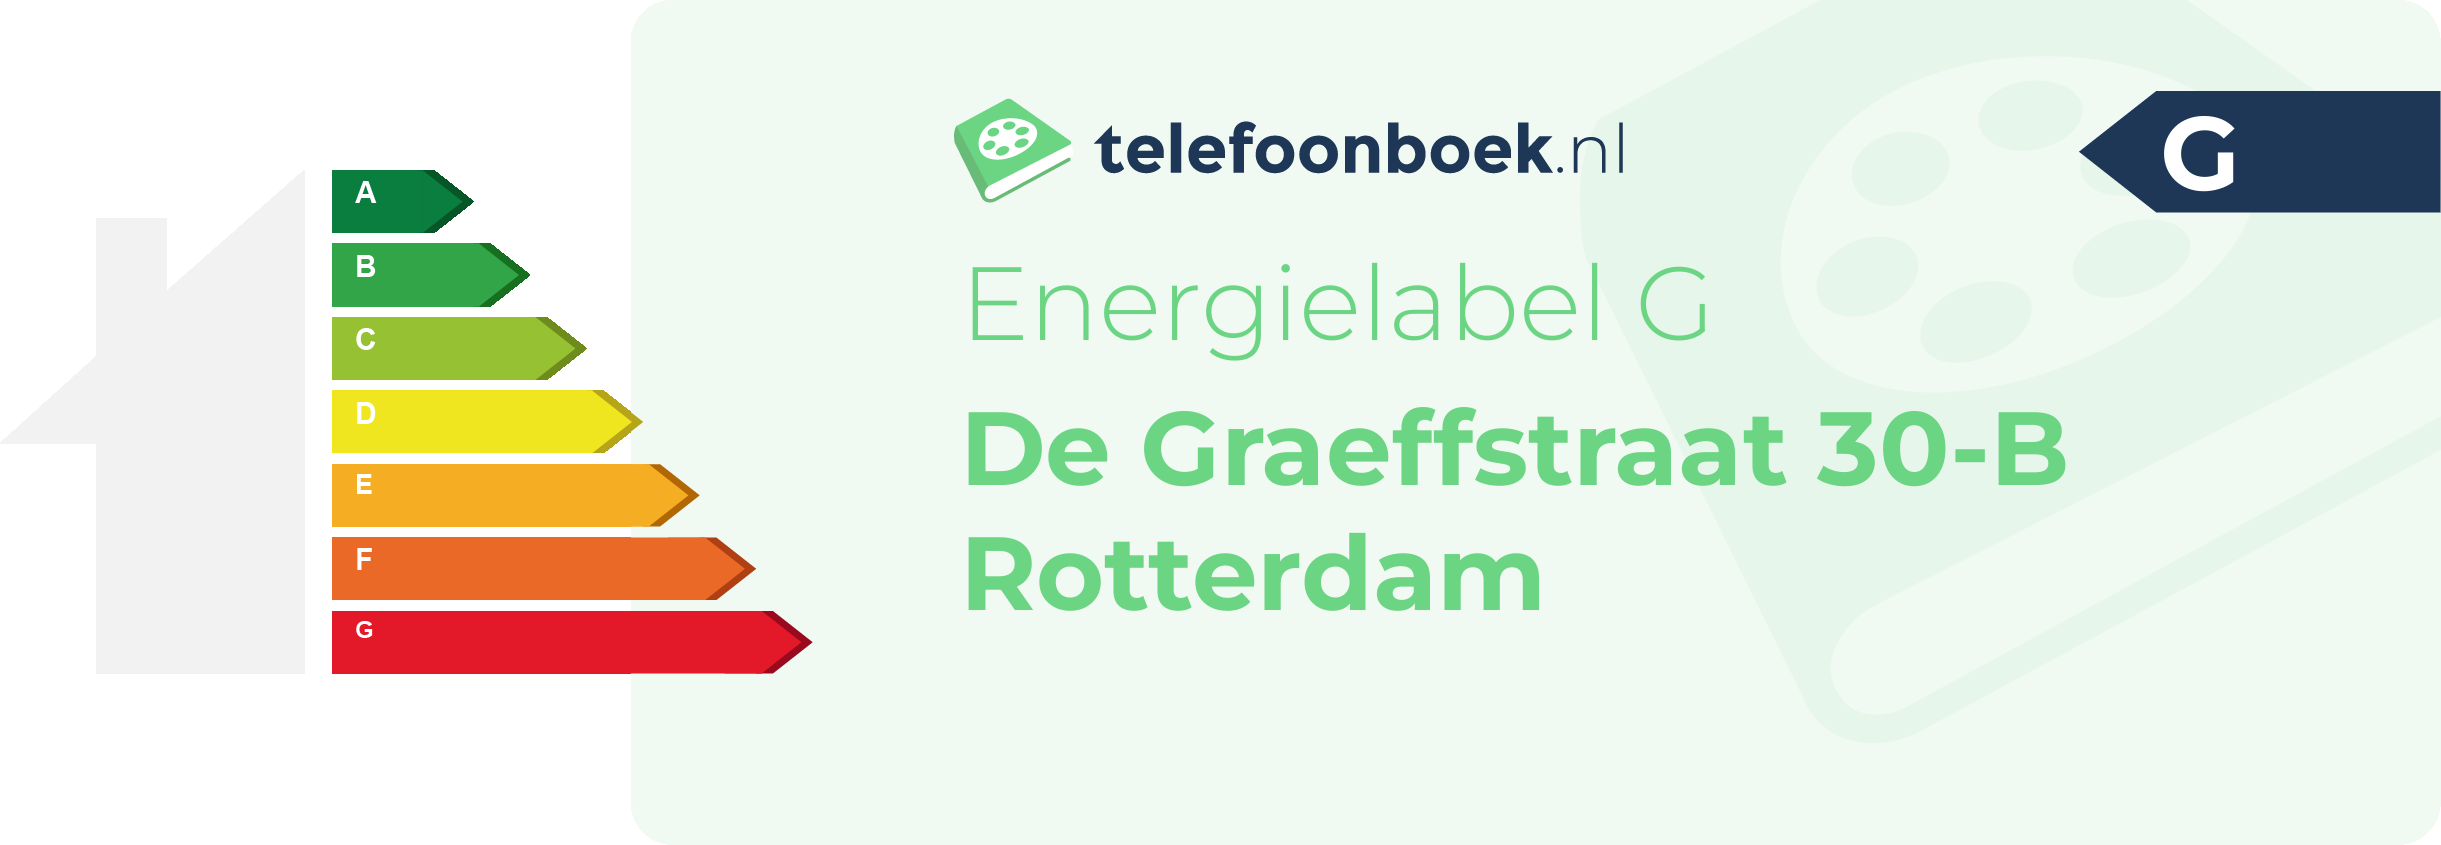 Energielabel De Graeffstraat 30-B Rotterdam